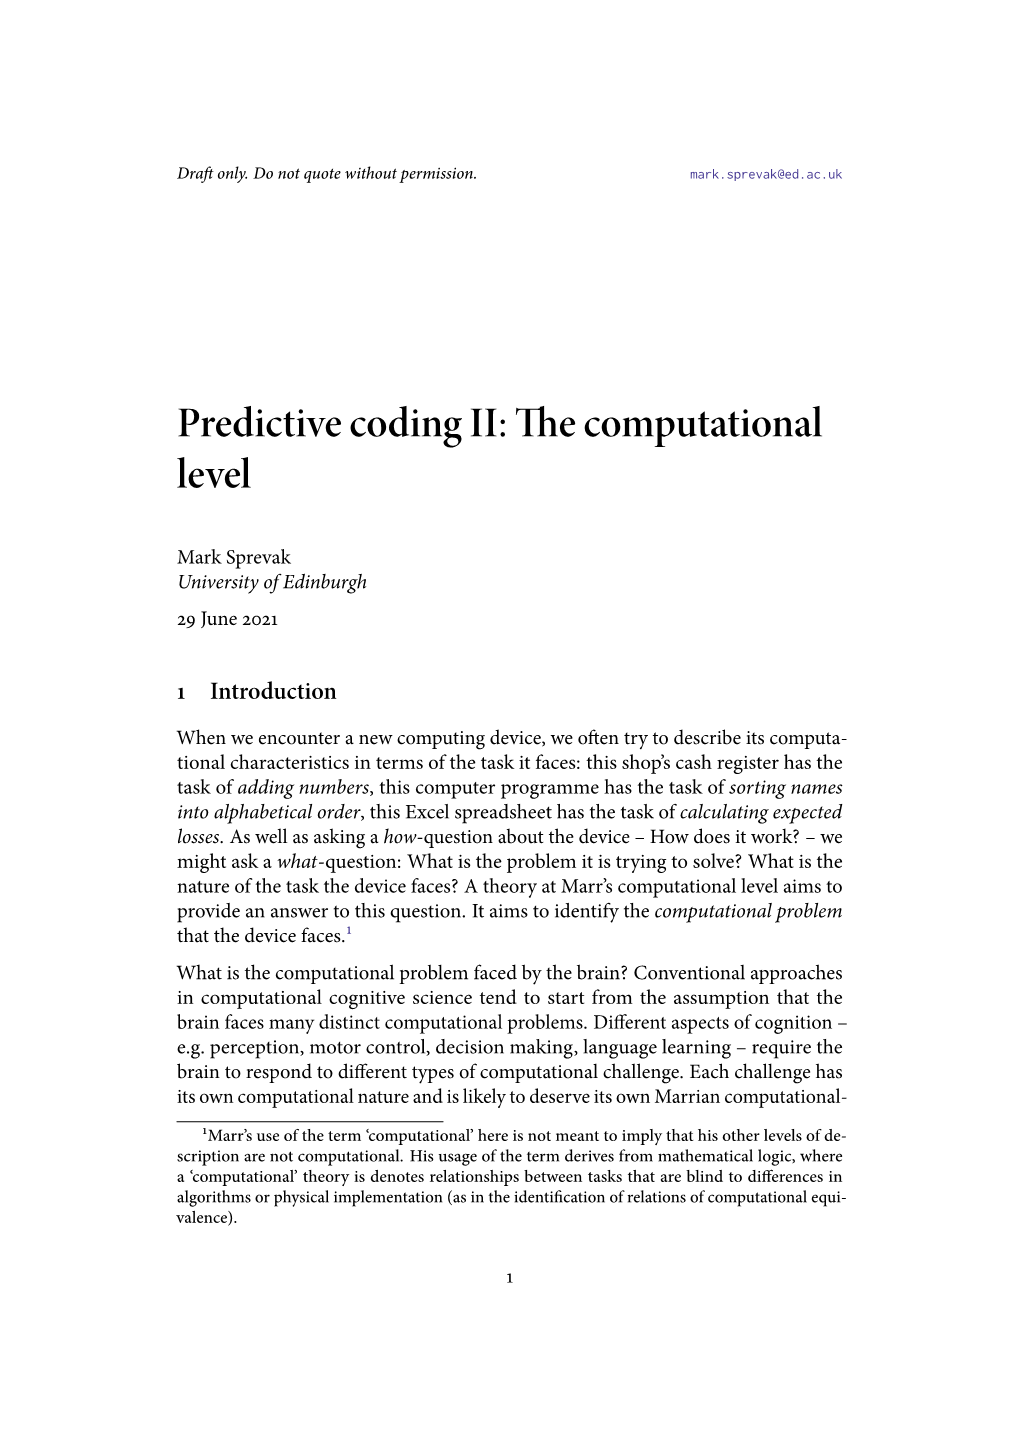 Predictive Coding II: the Computational Level